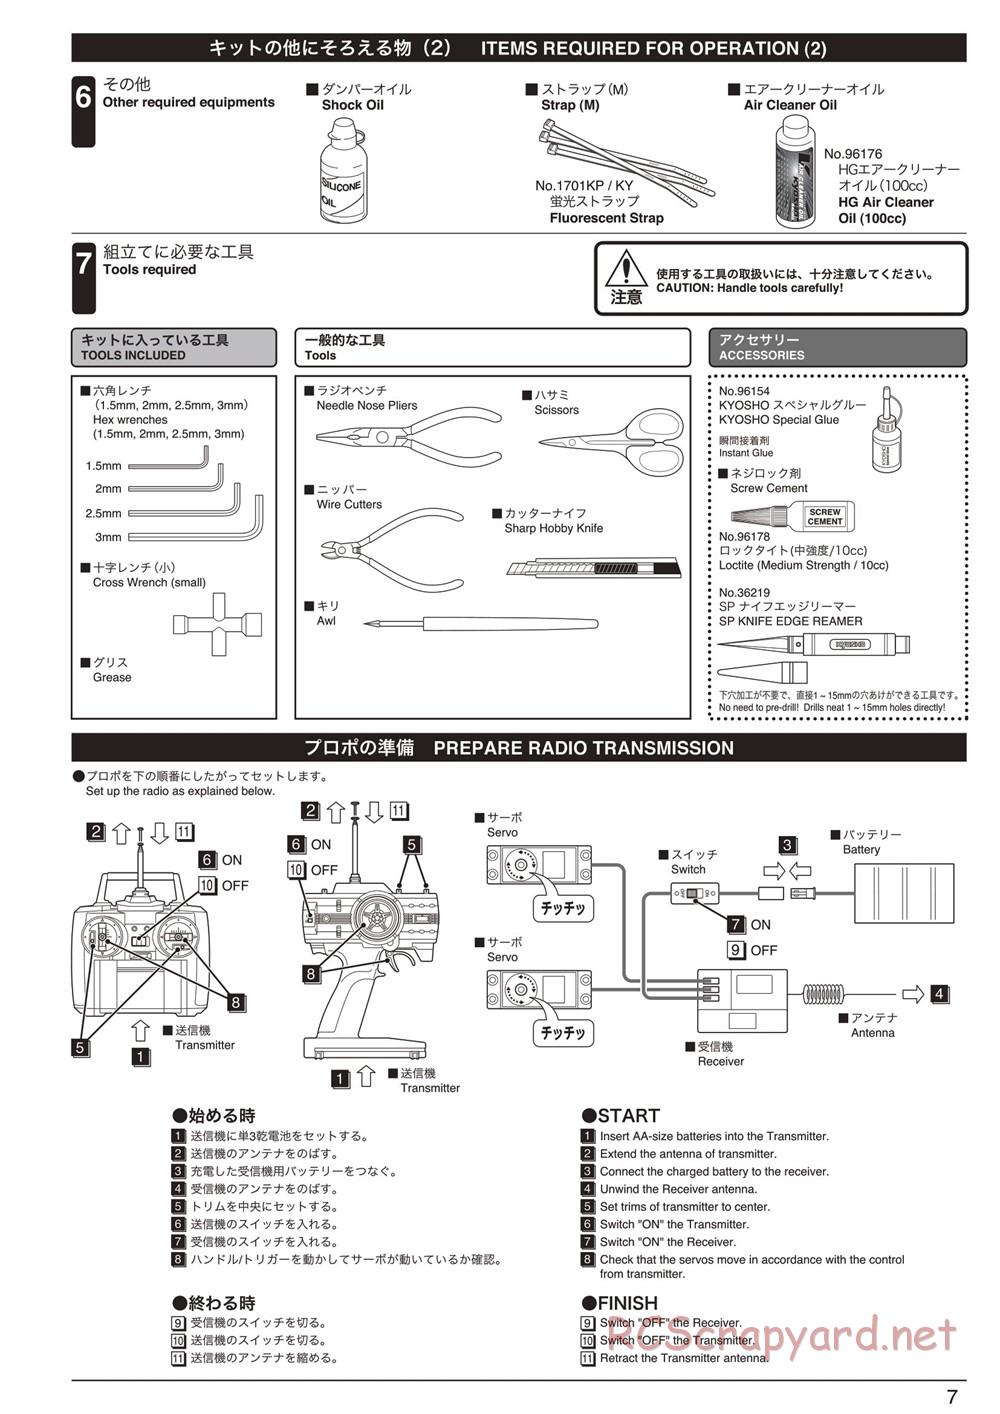 Kyosho - Inferno MP9 TKI3 - Manual - Page 7